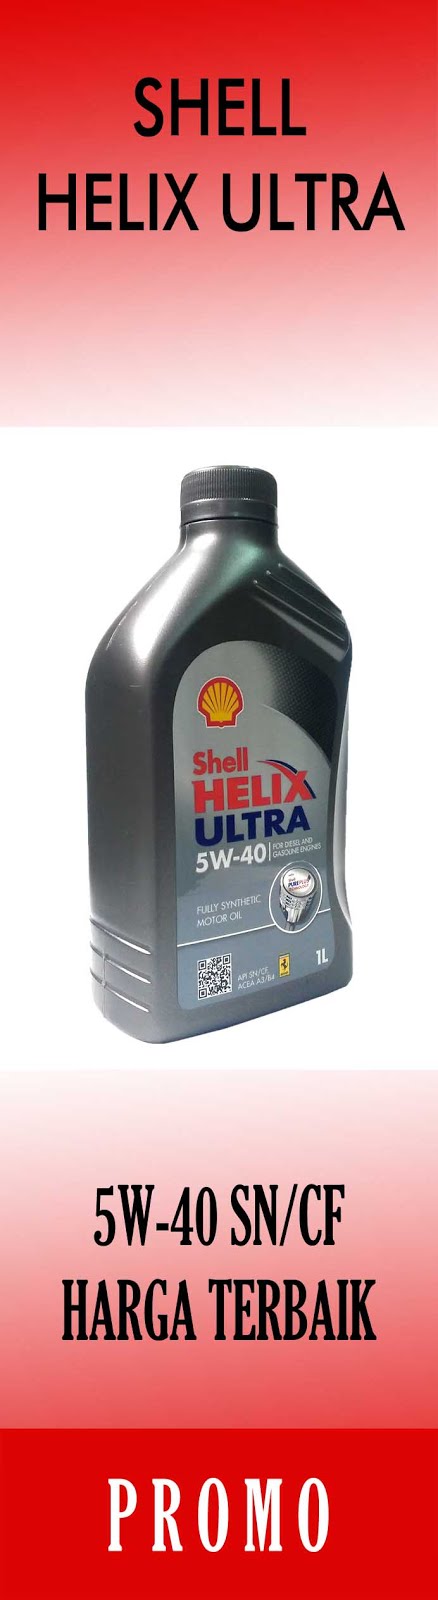 Promo Shell Helix Ultra